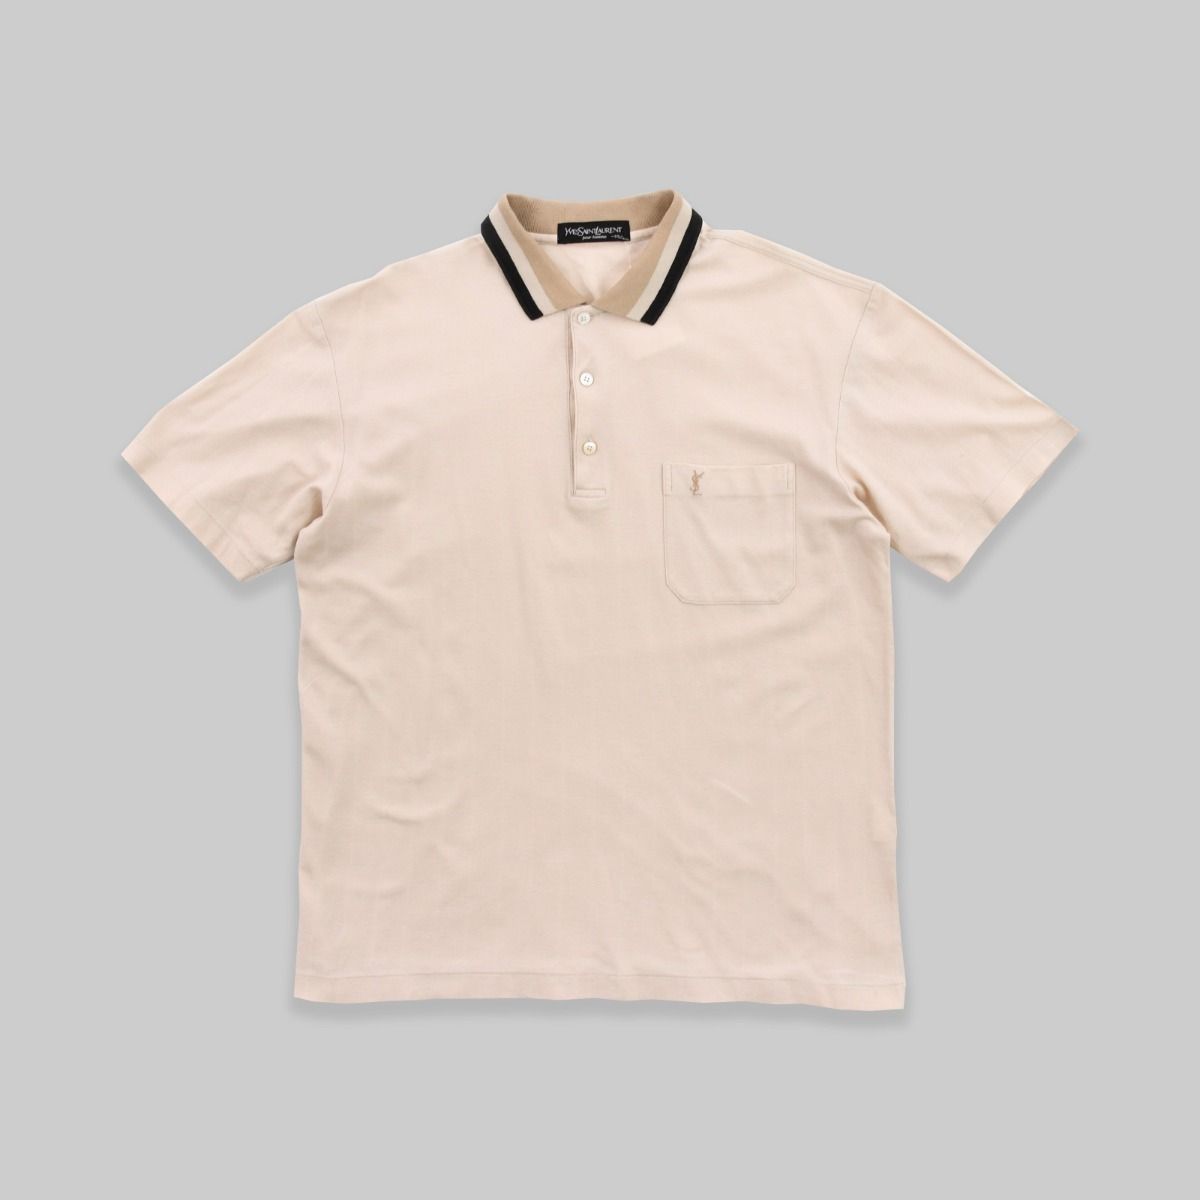 Yves Saint Laurent (YSL) Polo Shirt